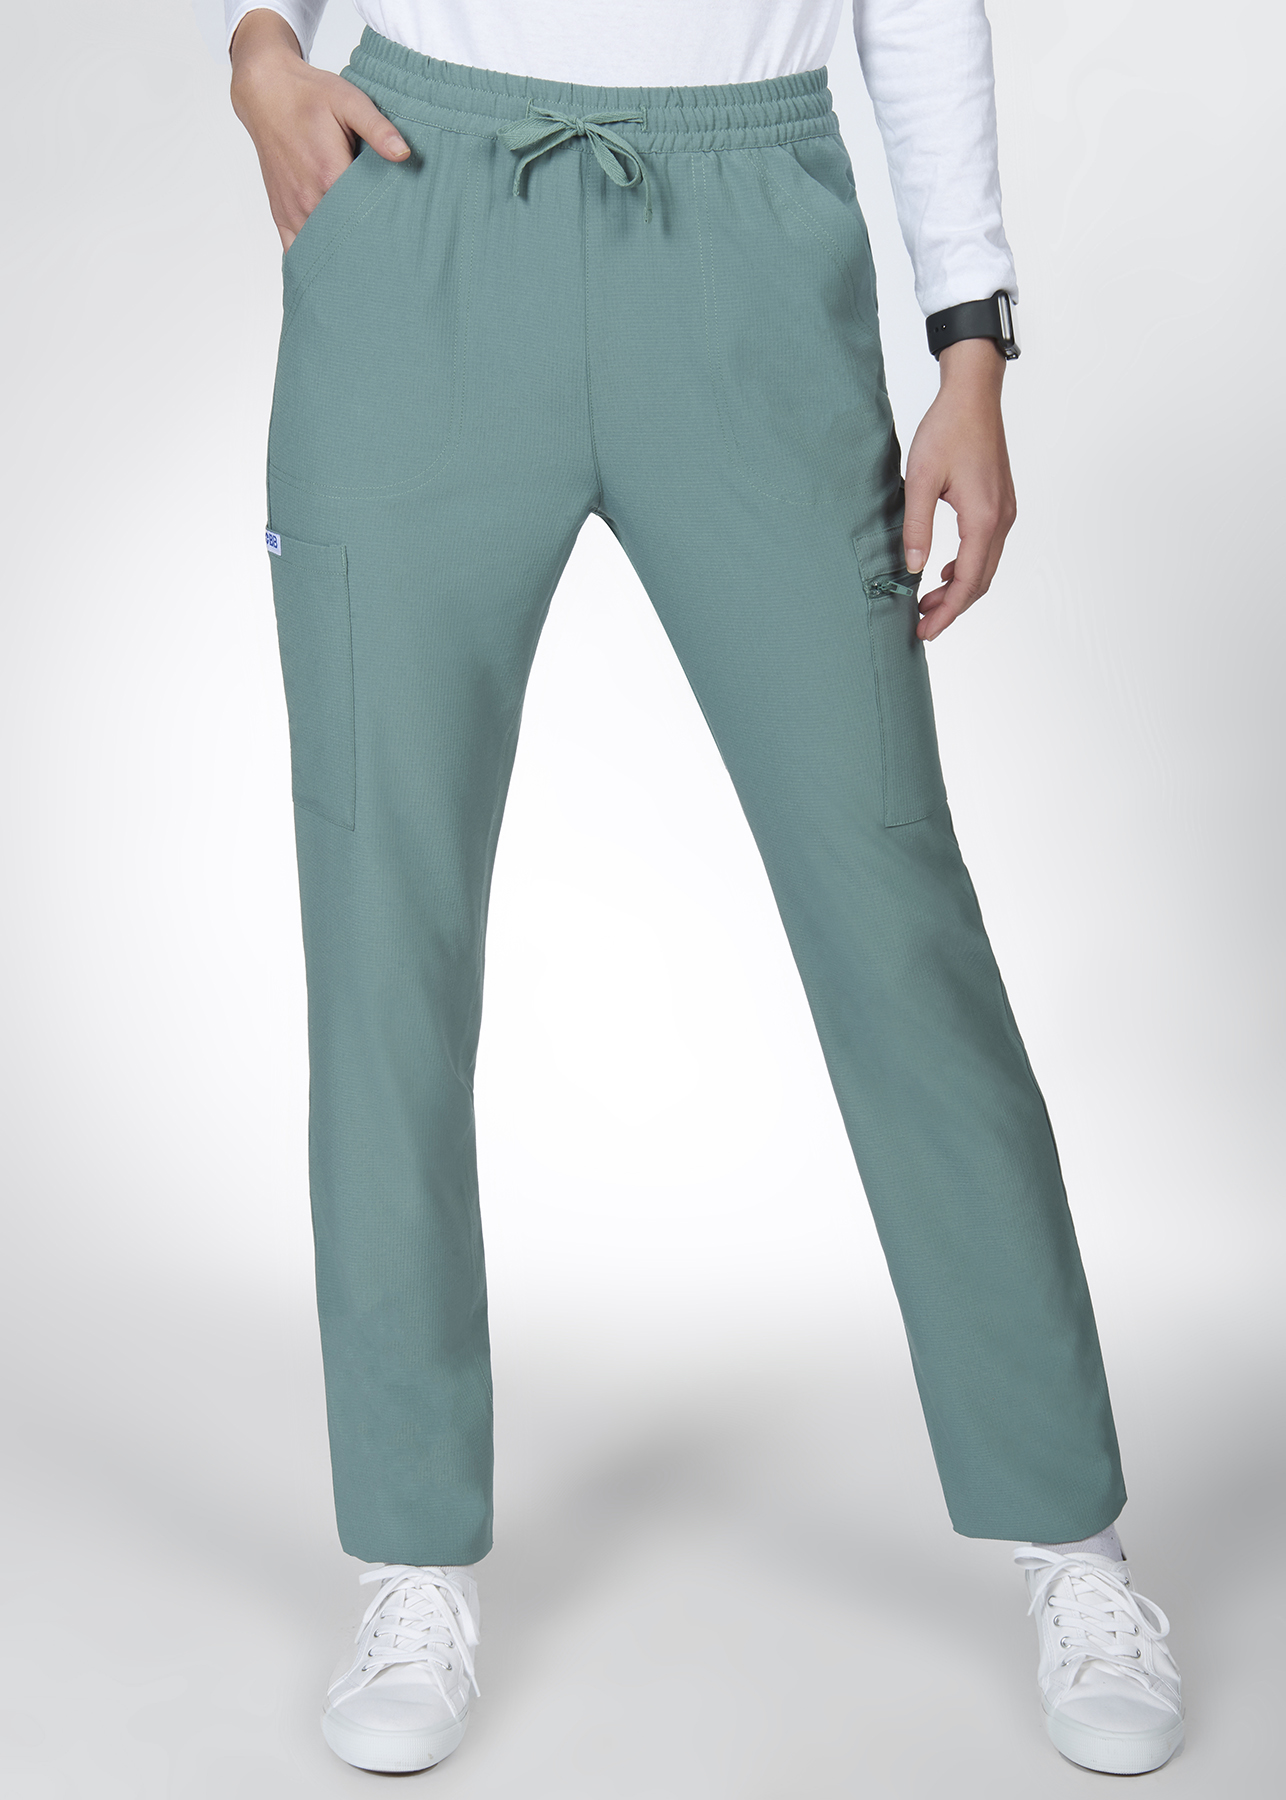 Microfiber unisex kitchen pants 4102 — Maxport Costumes for Work